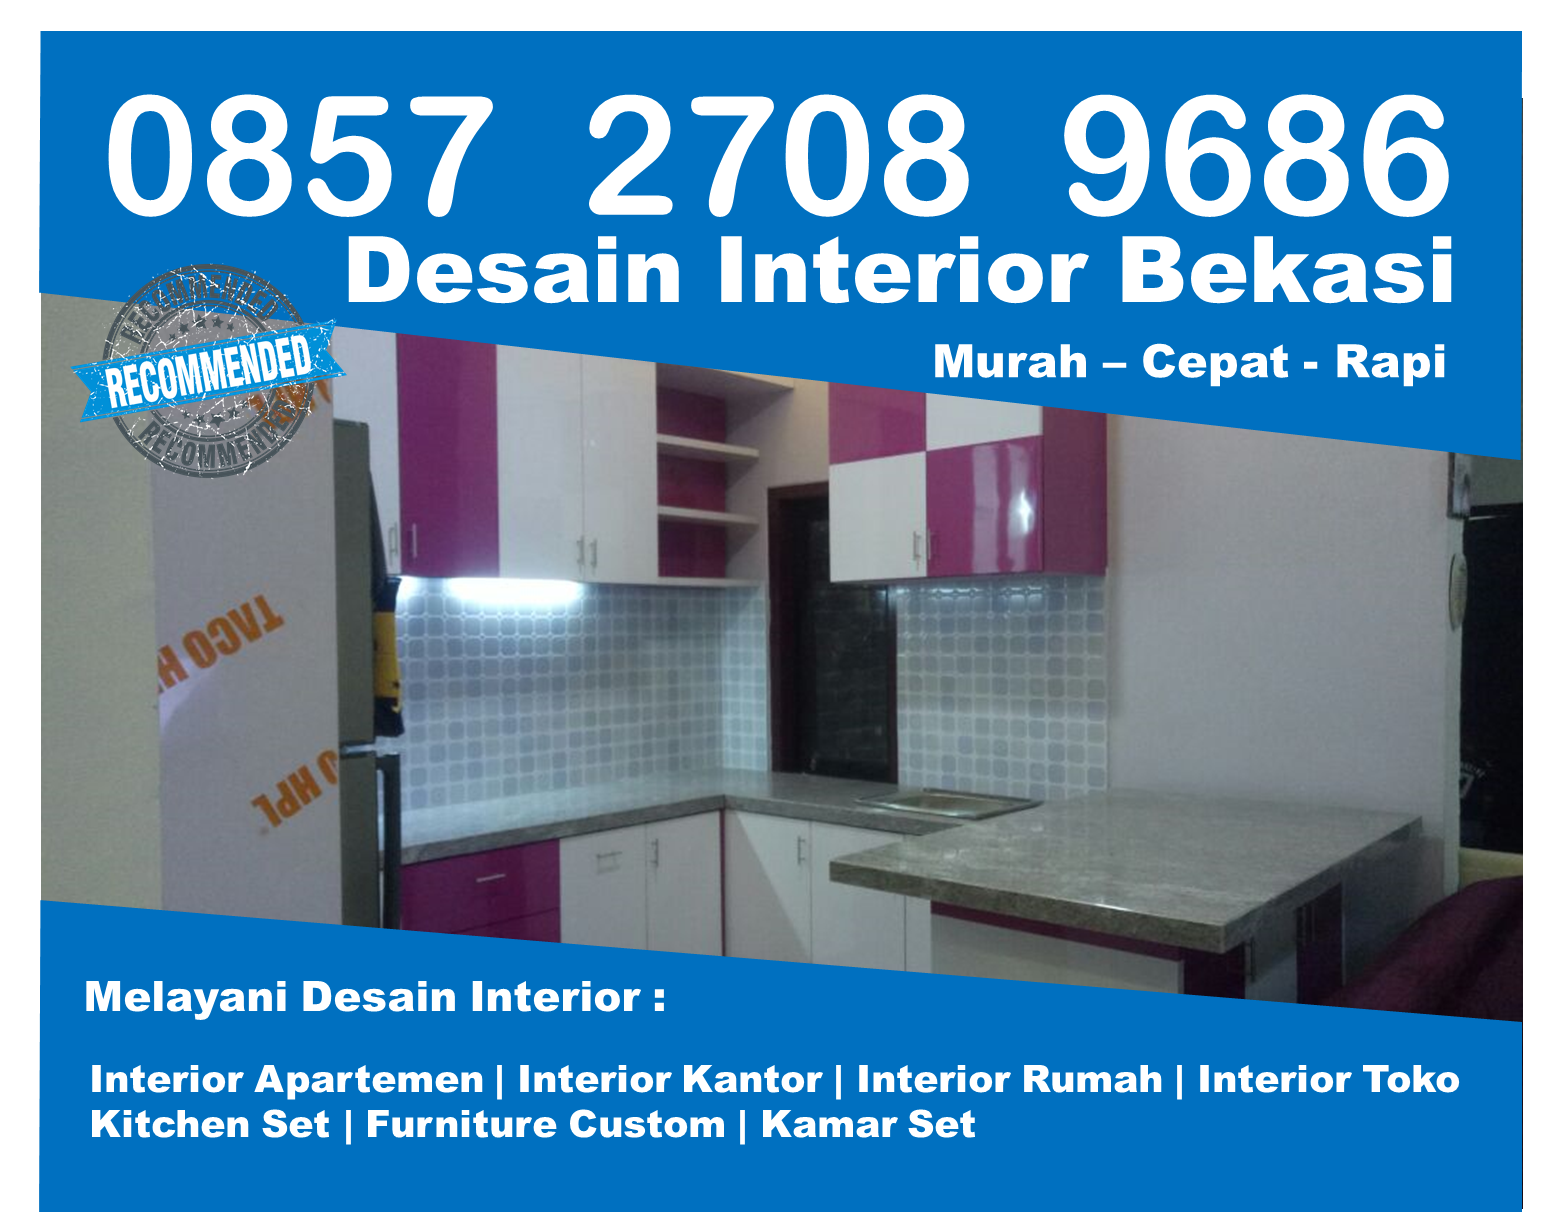 Telp 0857 2708 9686 Indosat Design Interior Furniture Bekasi